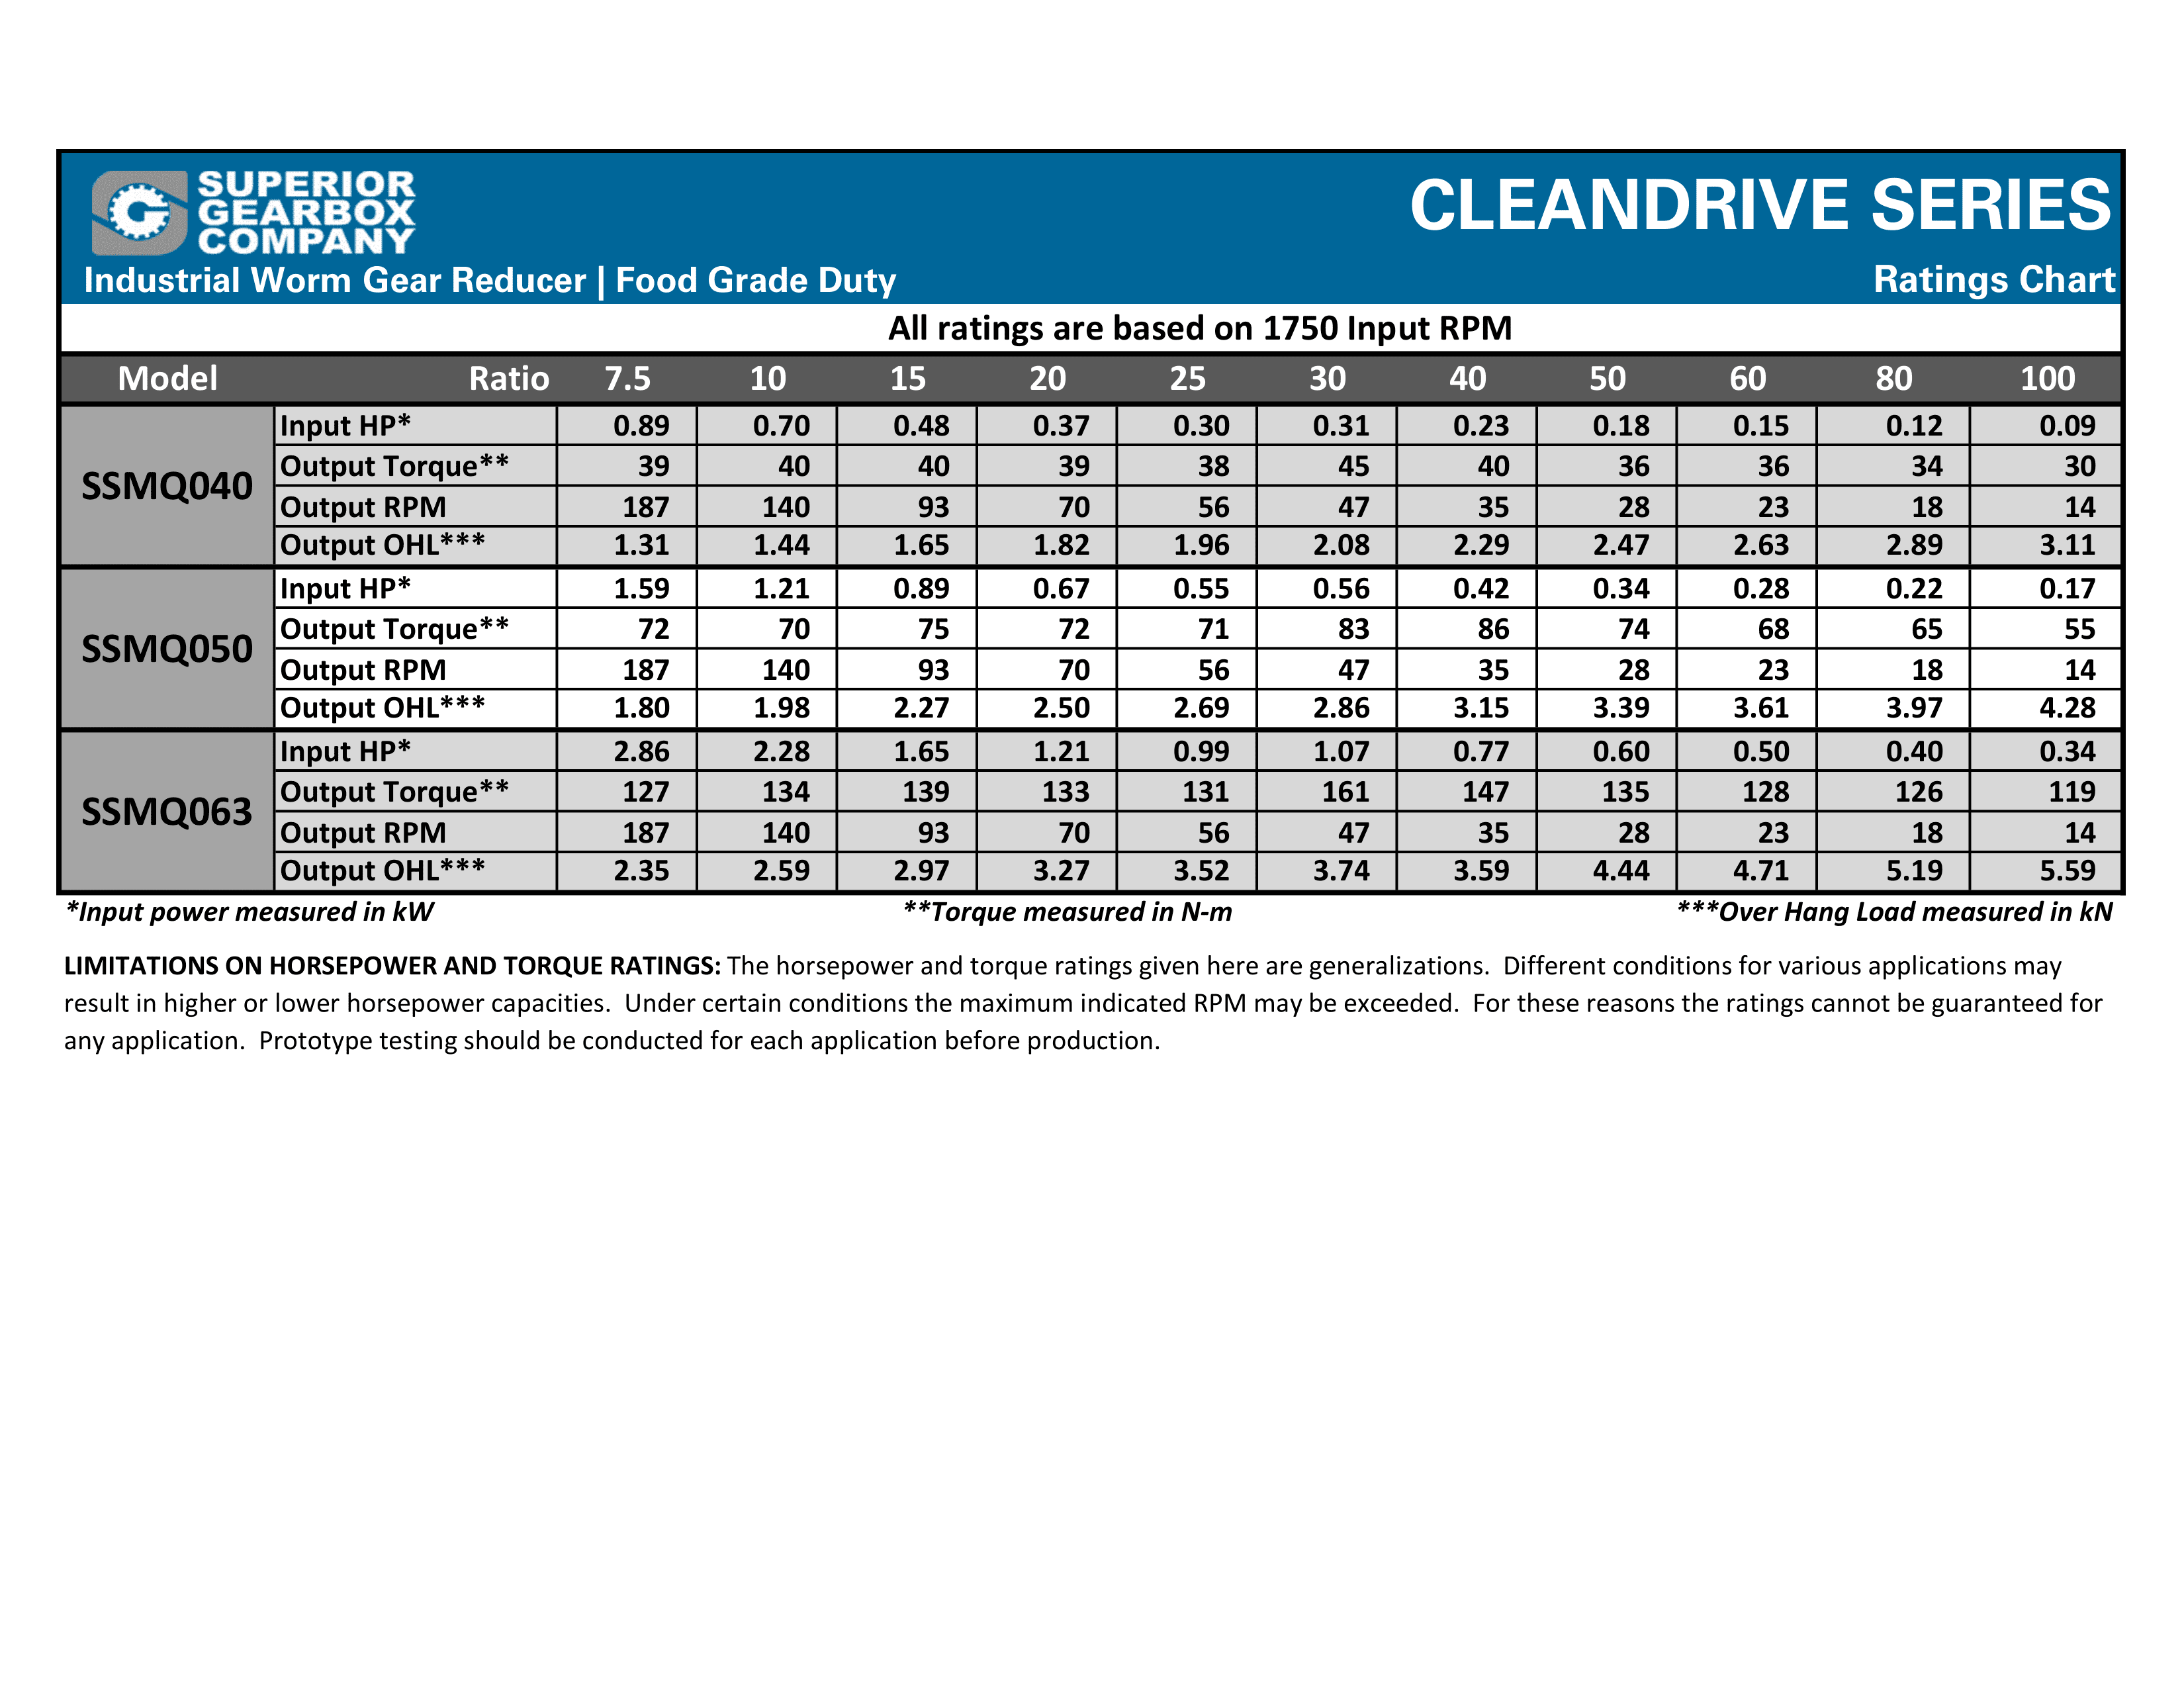 Cleandrive Ratings Chart